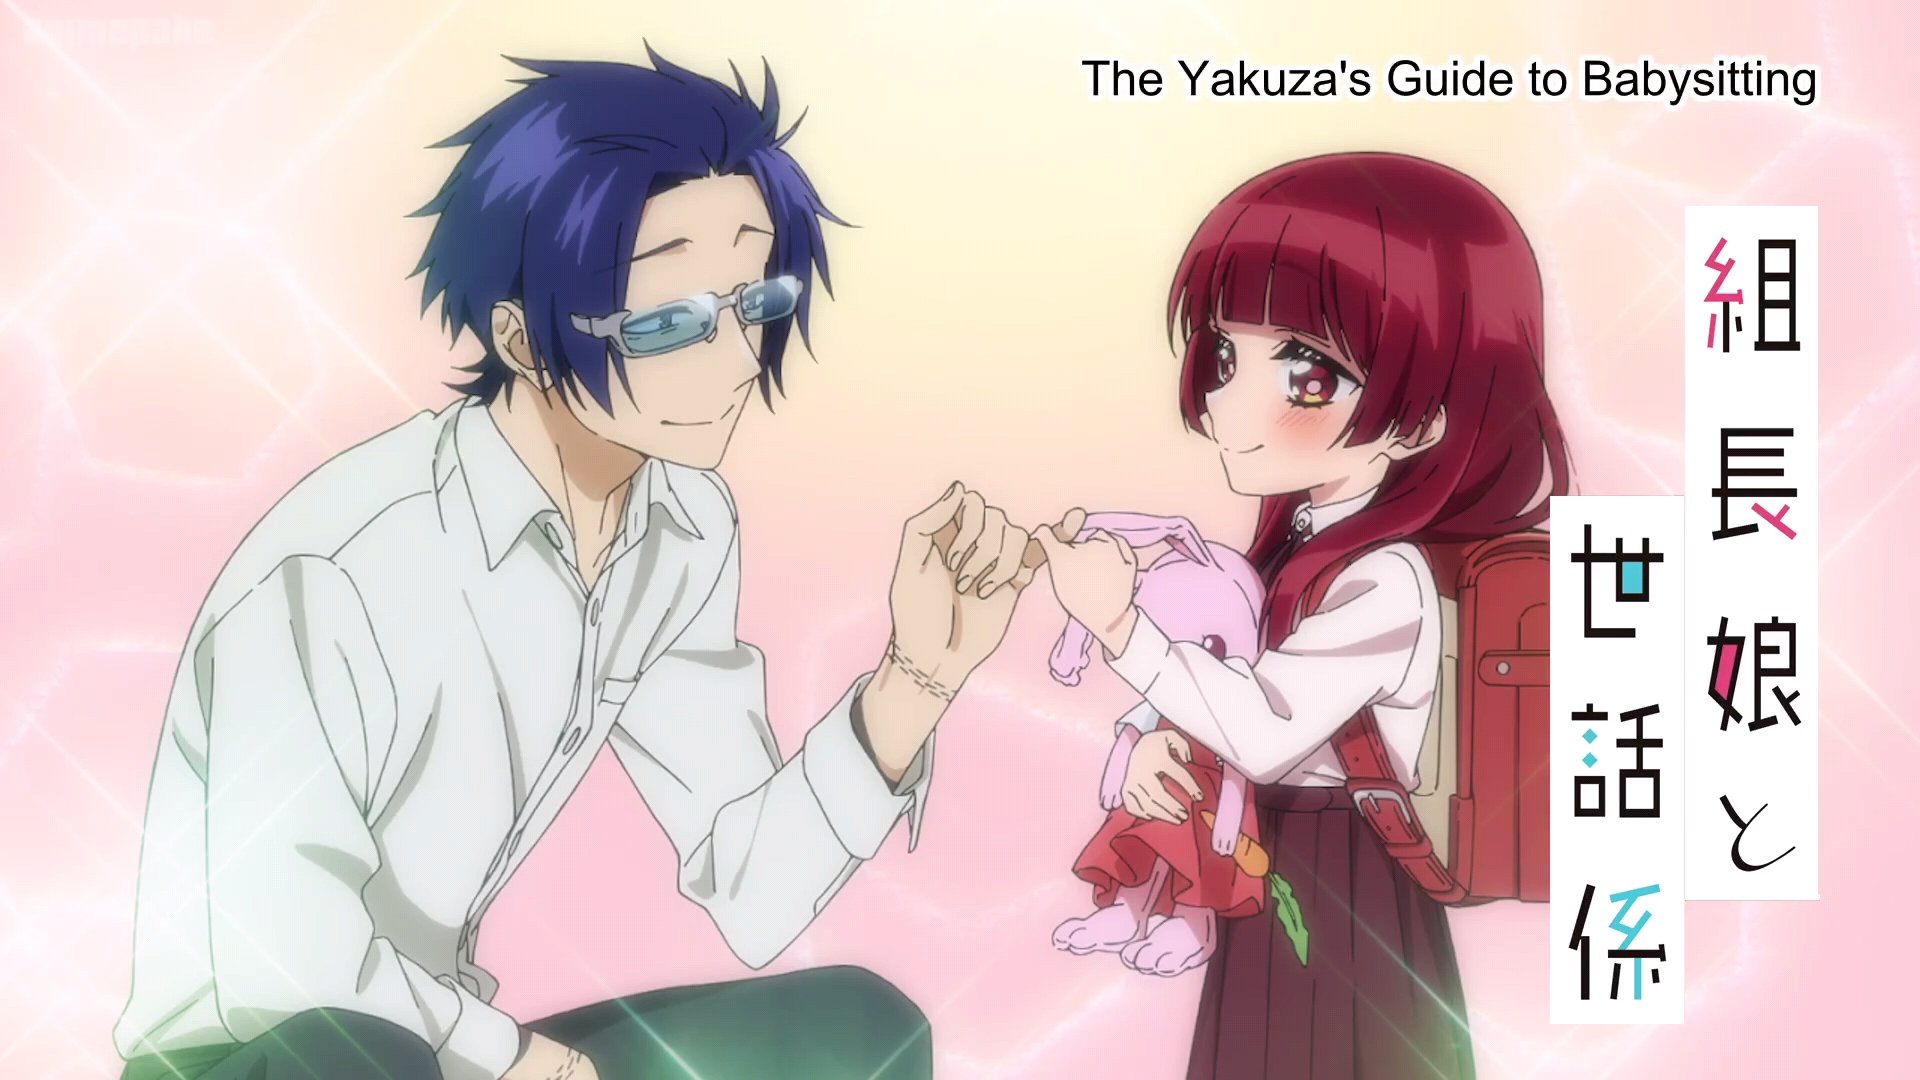 Anime Like The Yakuza's Guide to Babysitting